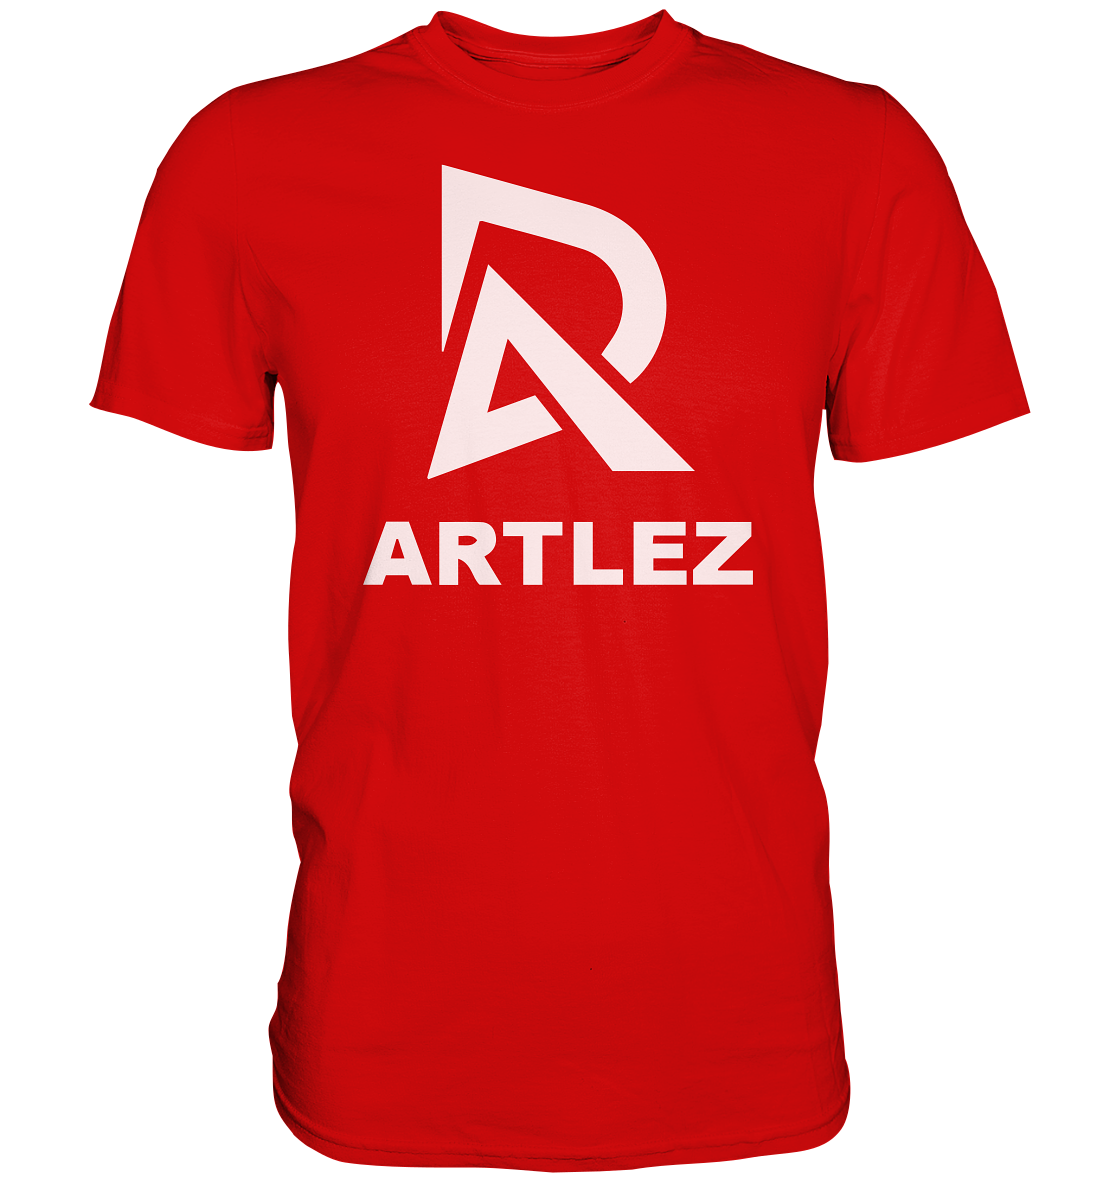 TEAM ARTLEZ - Basic Shirt